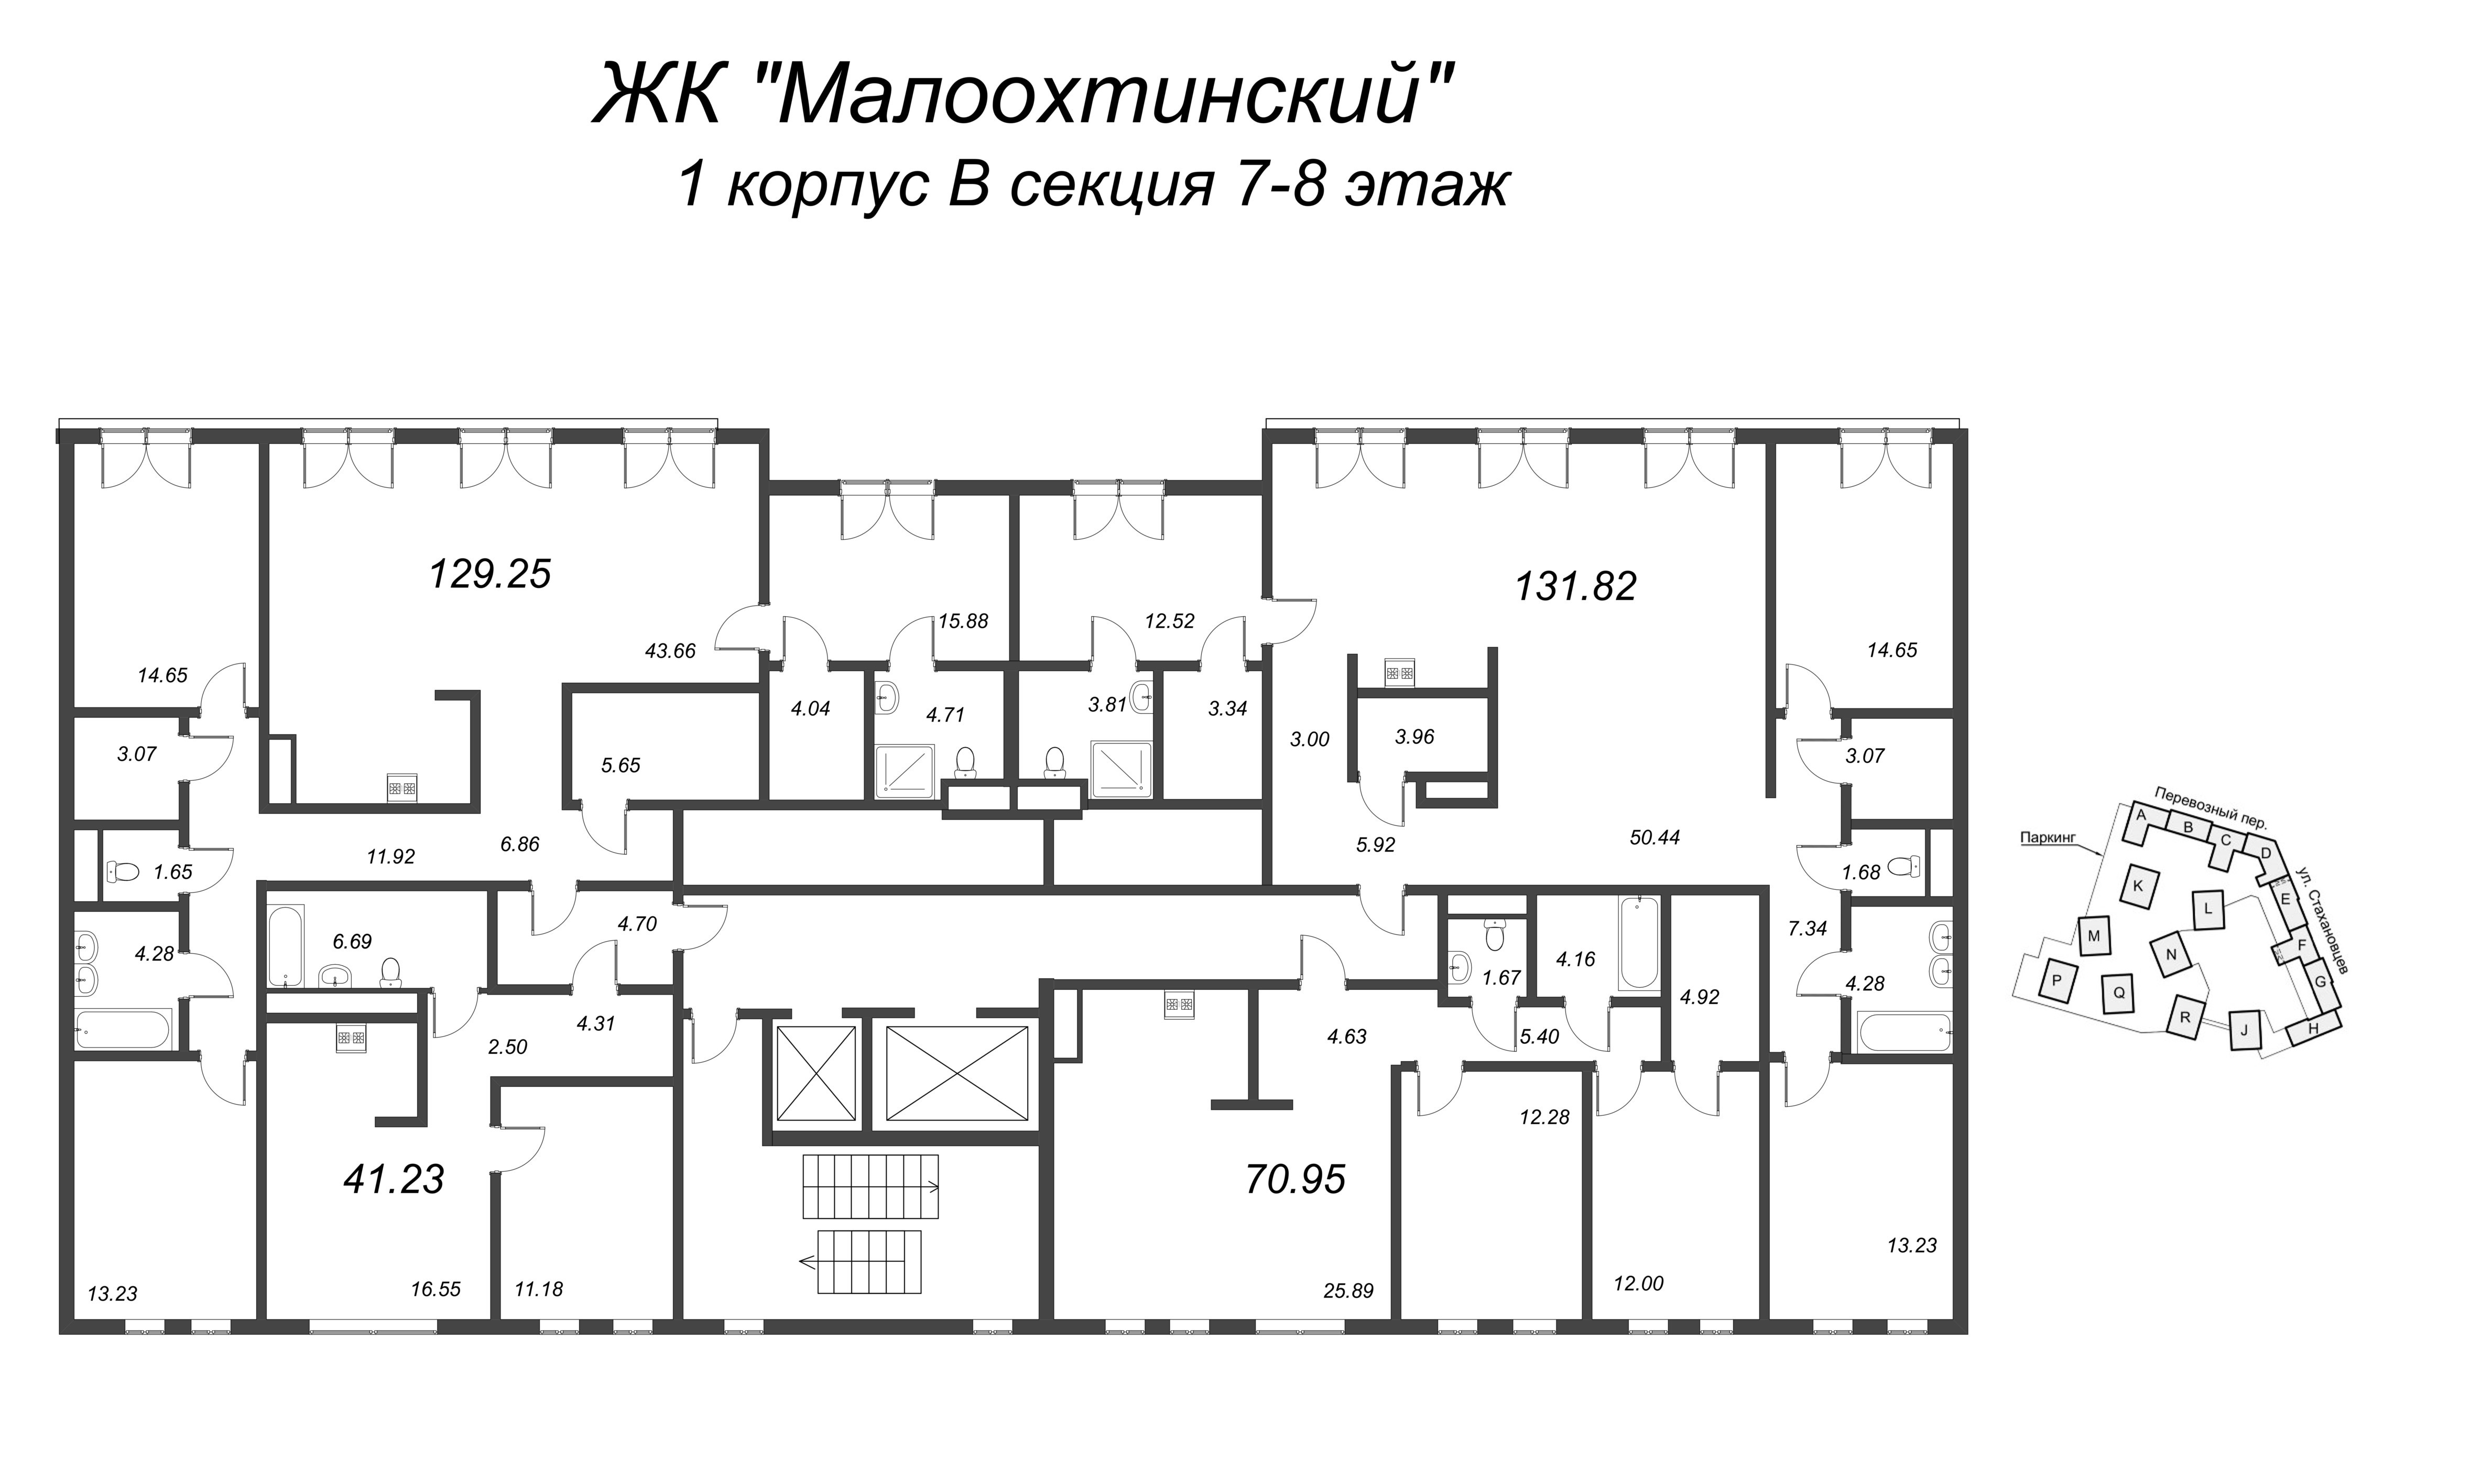 4-комнатная (Евро) квартира, 129.3 м² - планировка этажа